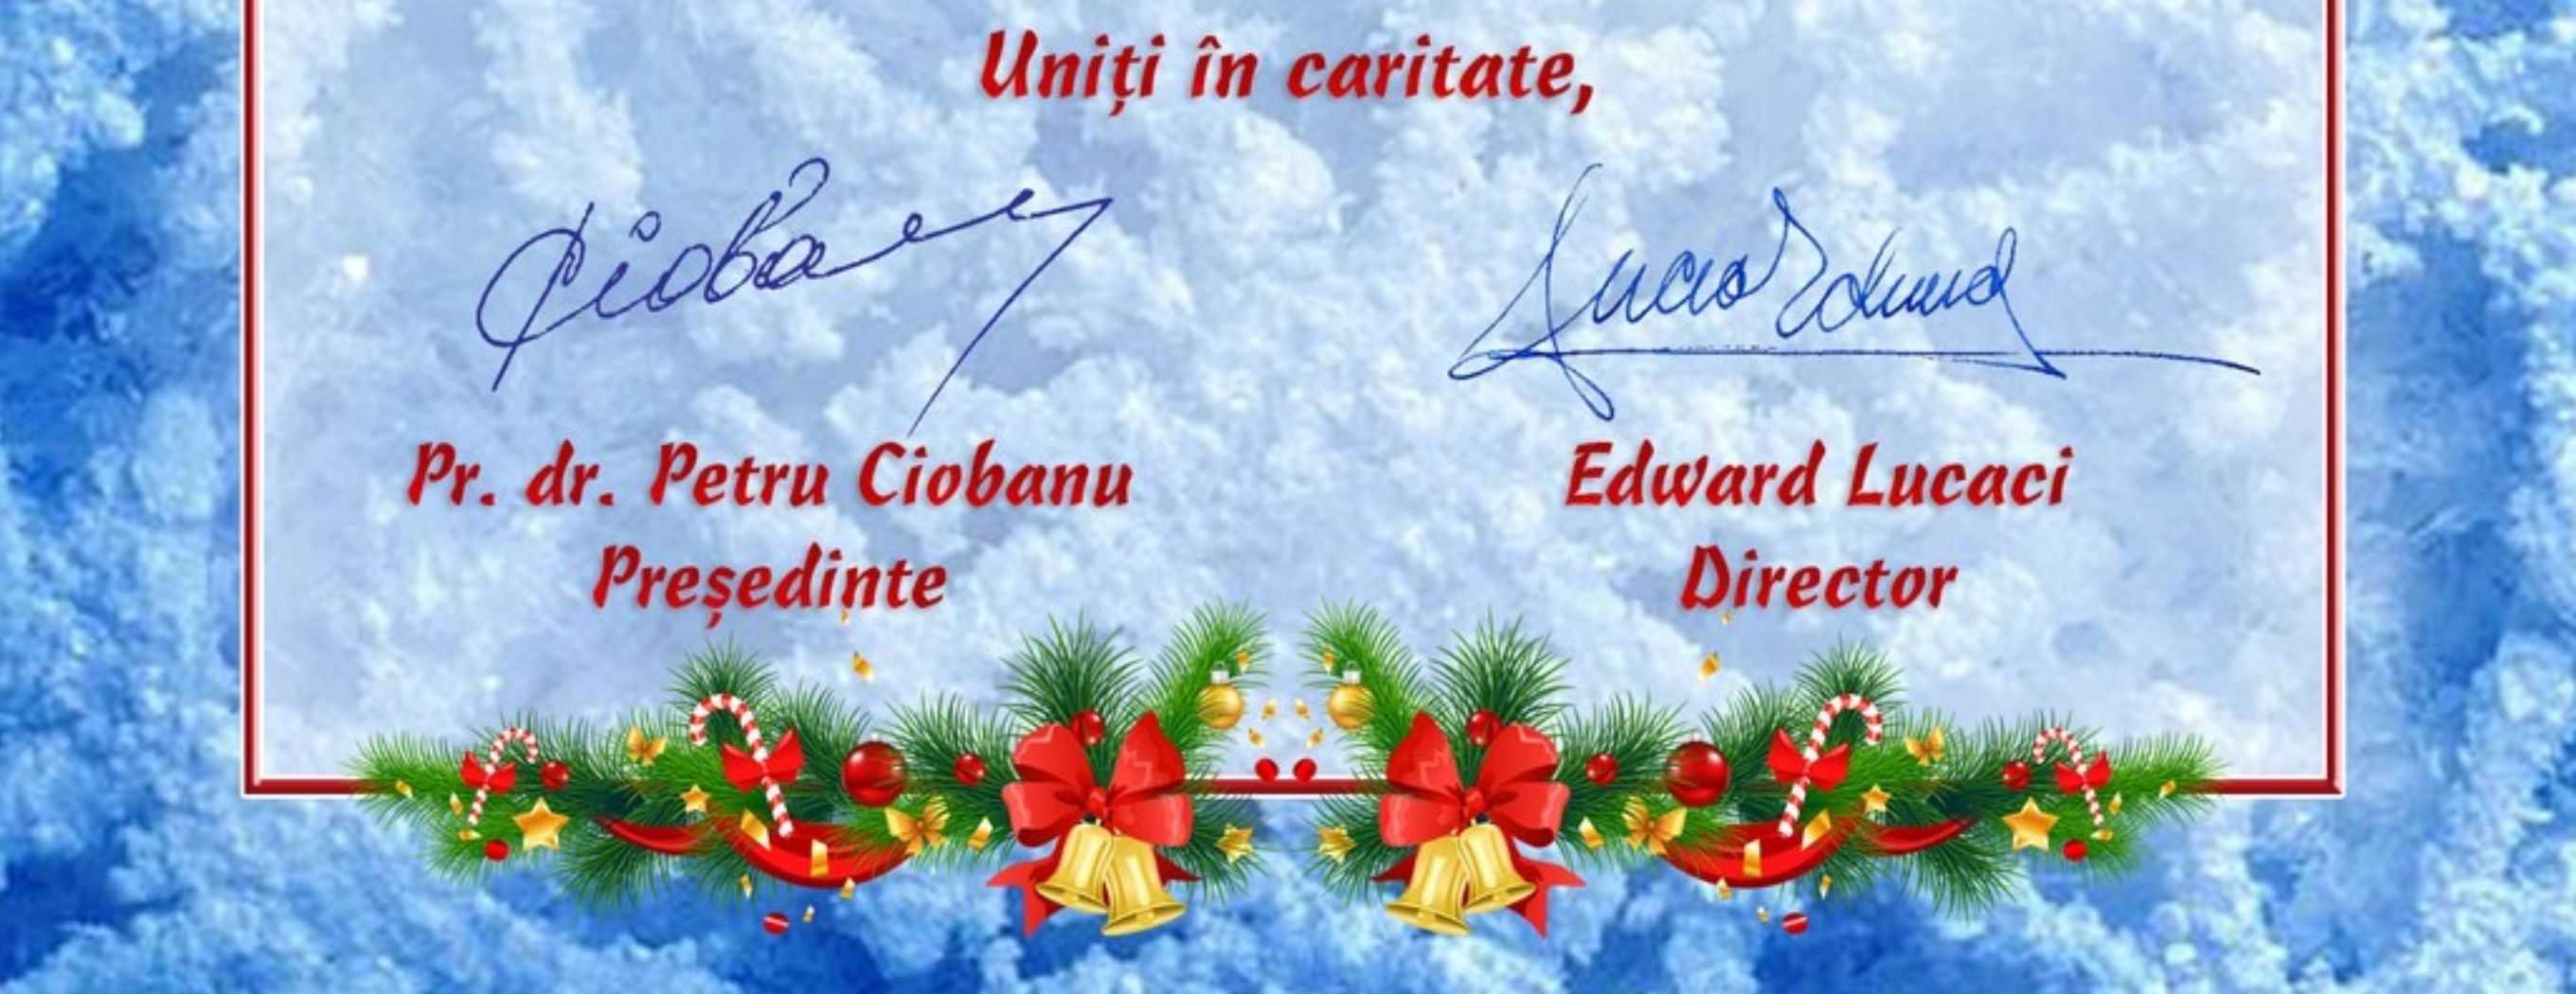 Послание президента и директора Каритас Молдова по случаю зимних праздников